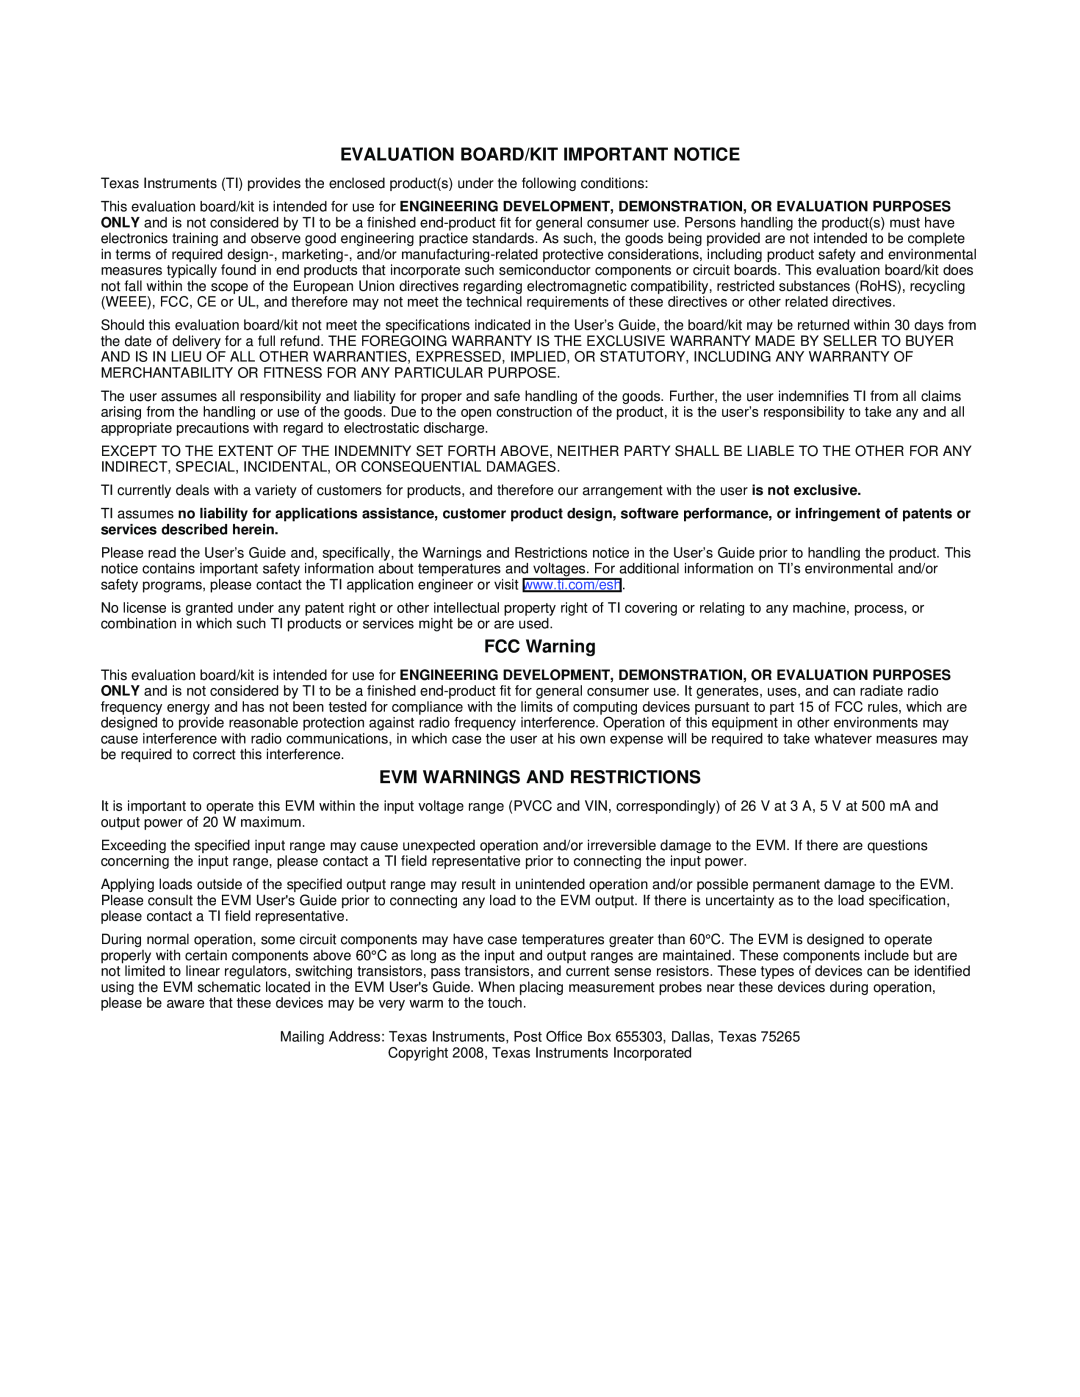 Texas Instruments TA5704EVM manual Evaluation Board/Kit Important Notice, FCC Warning, Evm Warnings And Restrictions 